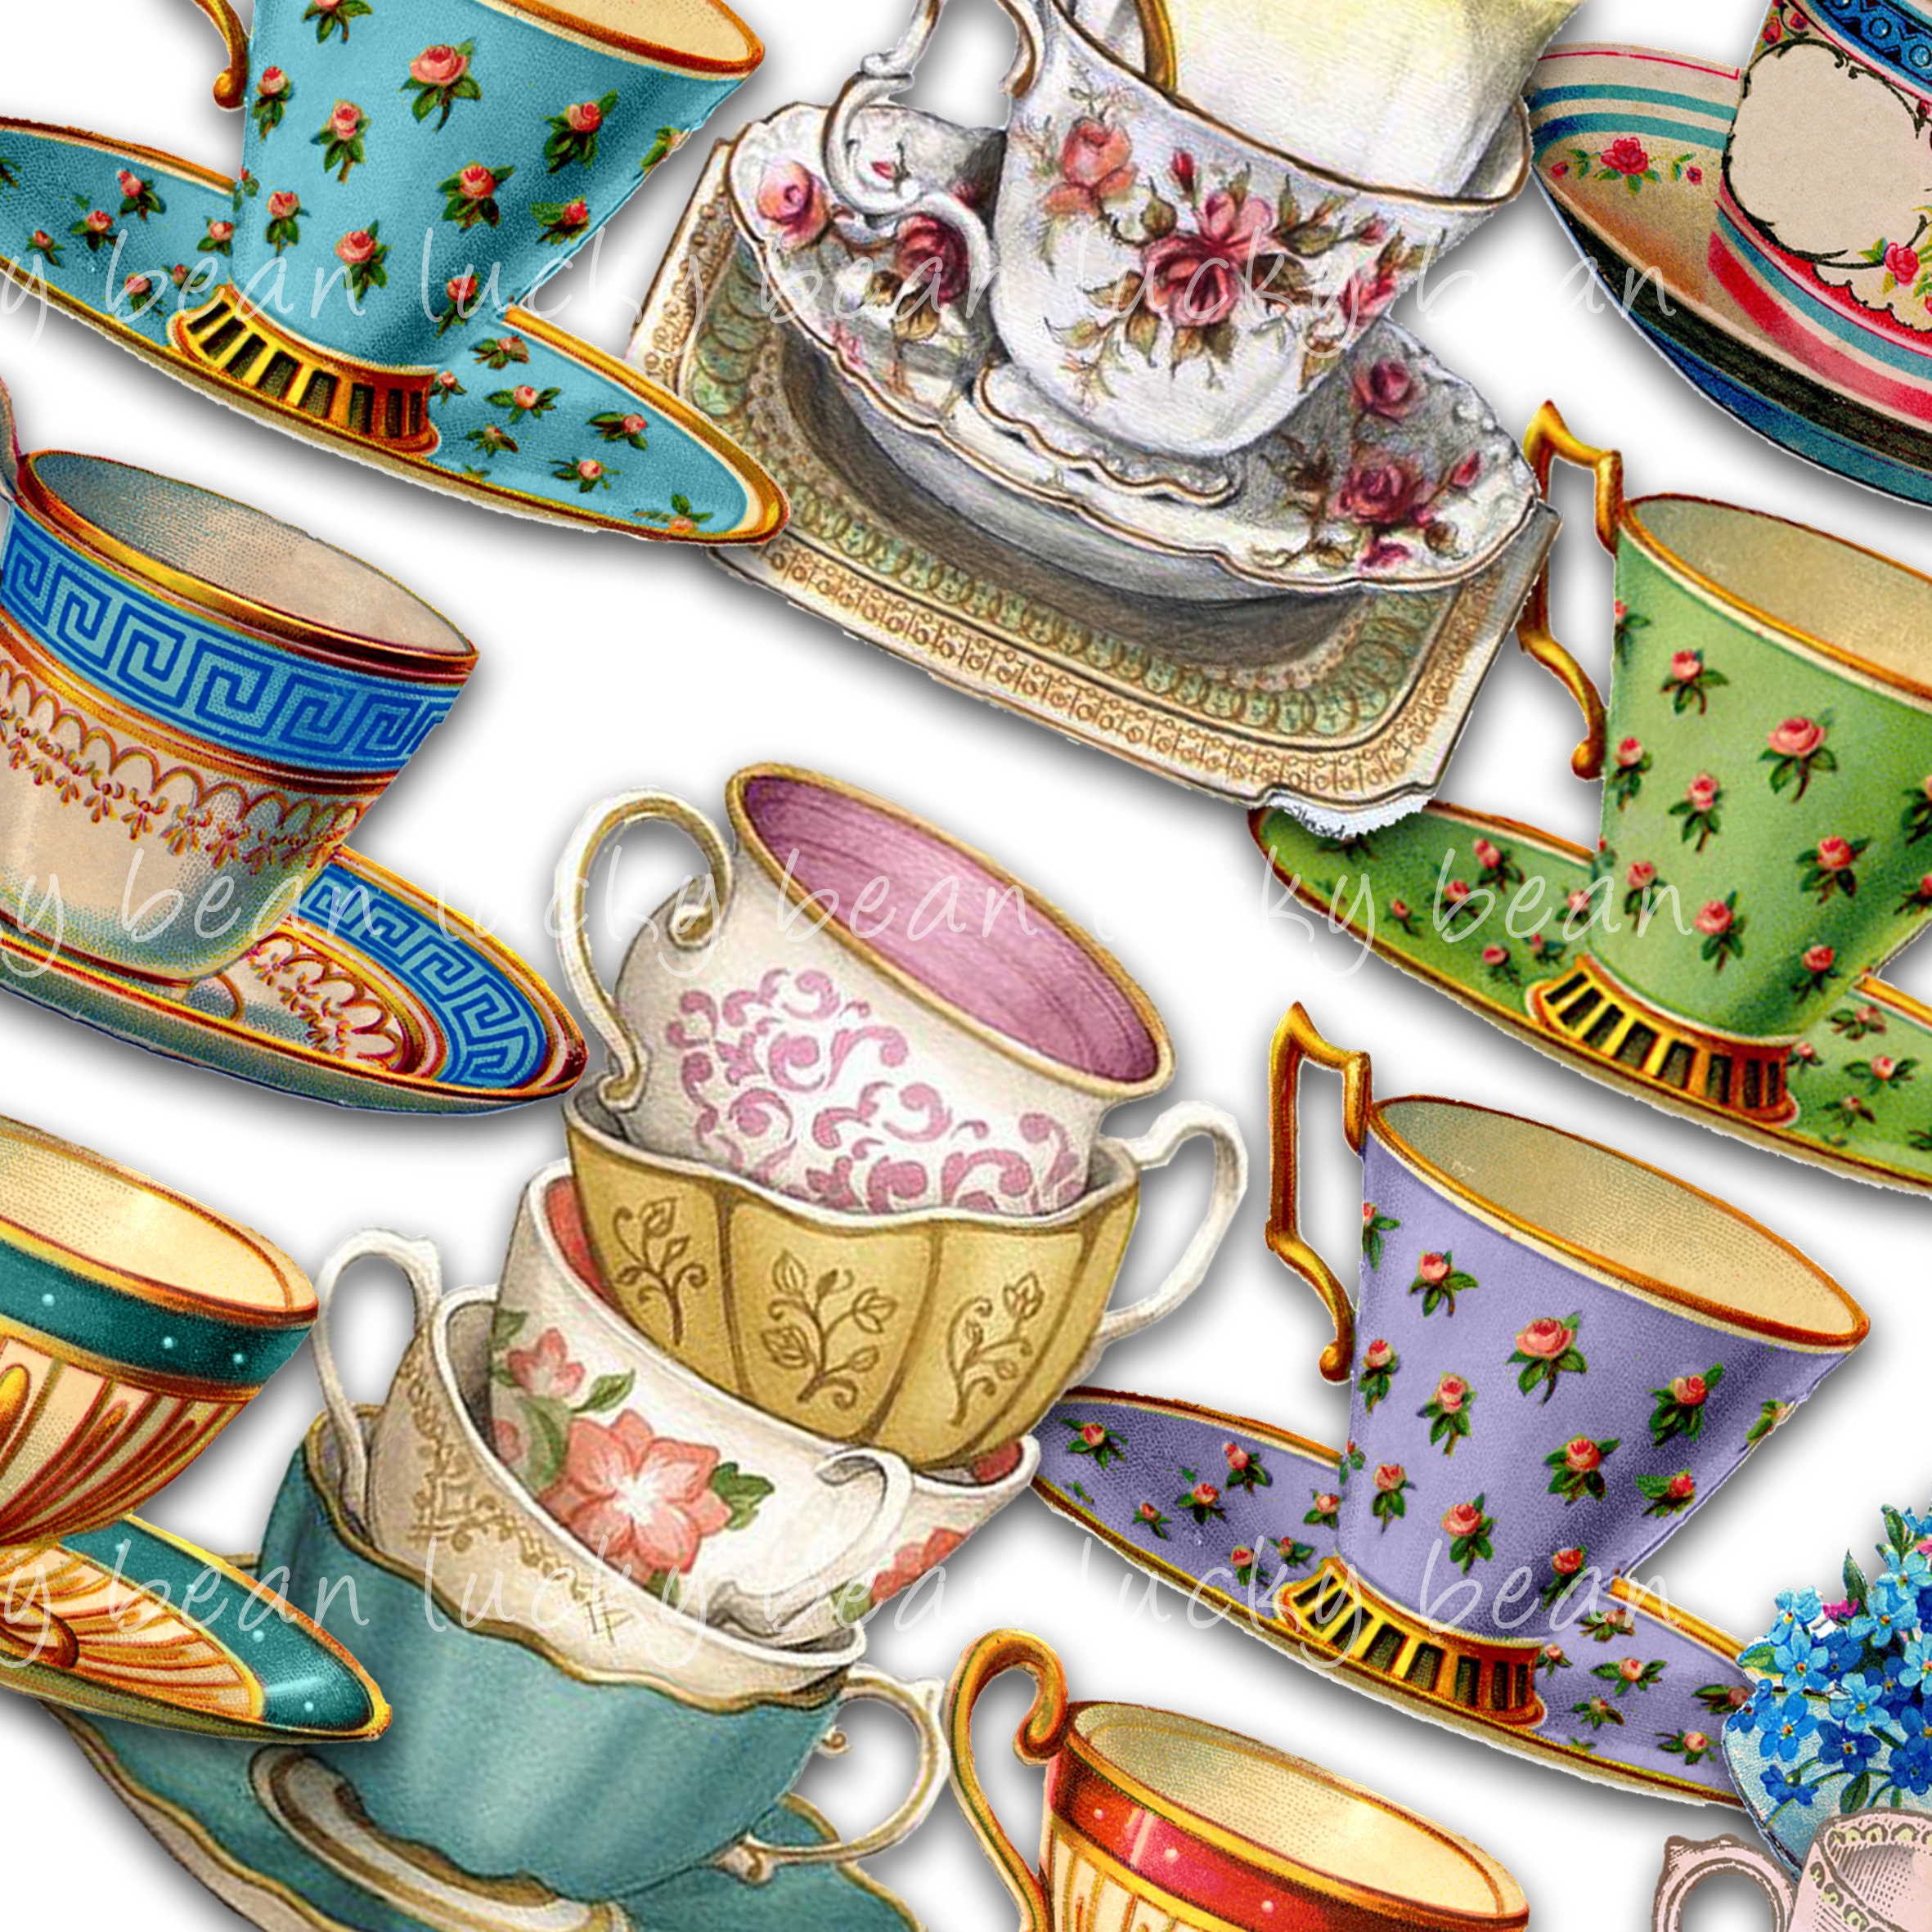 Teacup Clipart Tea Clipart Teacup Floral Vintage Tea Cups Tea Party Clipart Tea  Cups Clipart Teapots Digital Collage Sheet Fussy Cut,cricut -  Israel